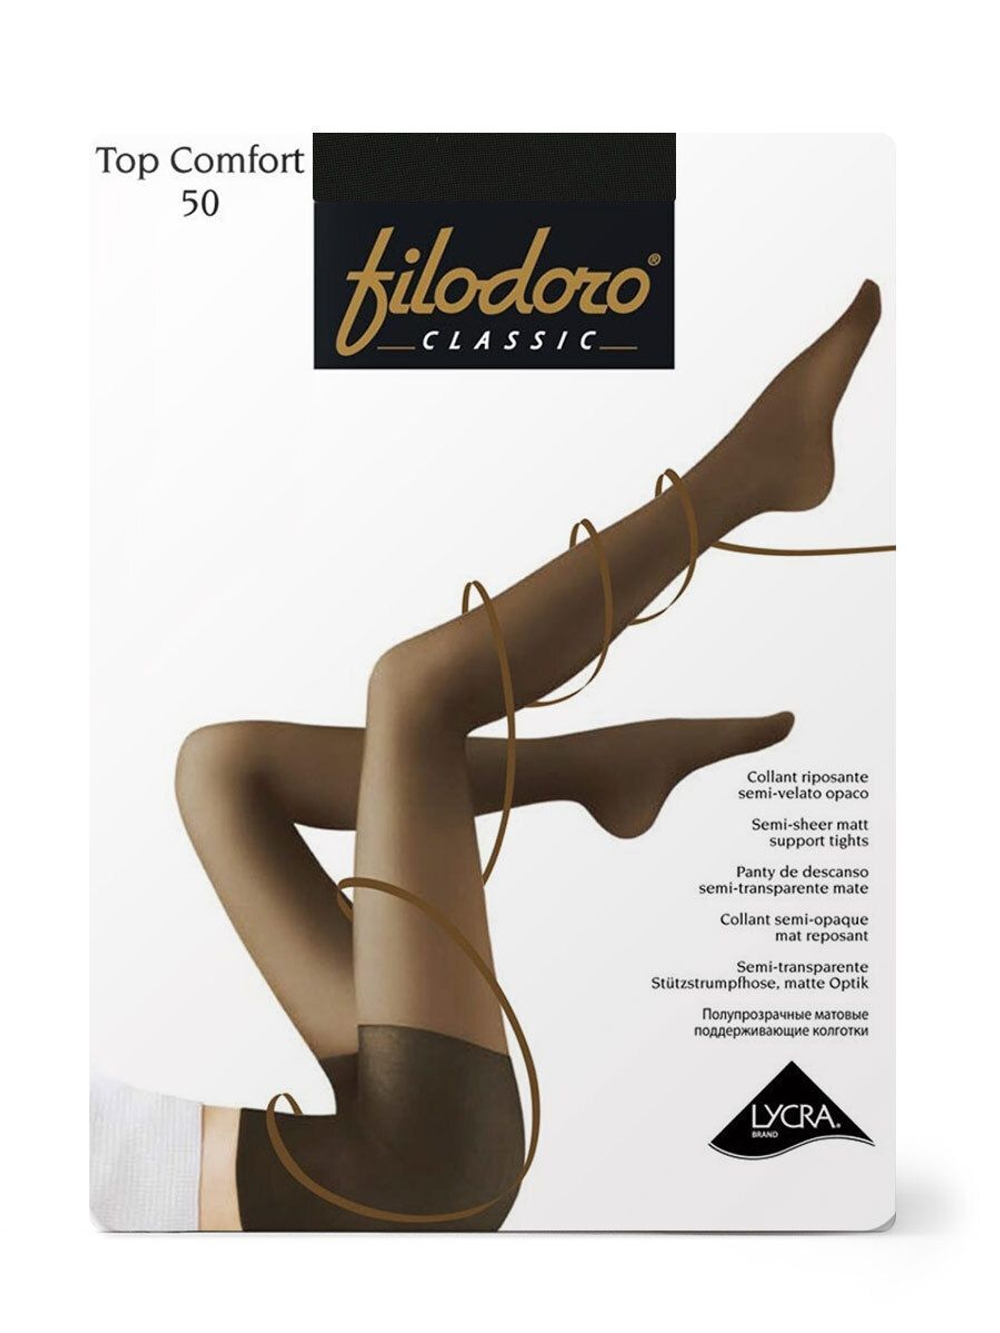 Filodoro Top Comfort 50